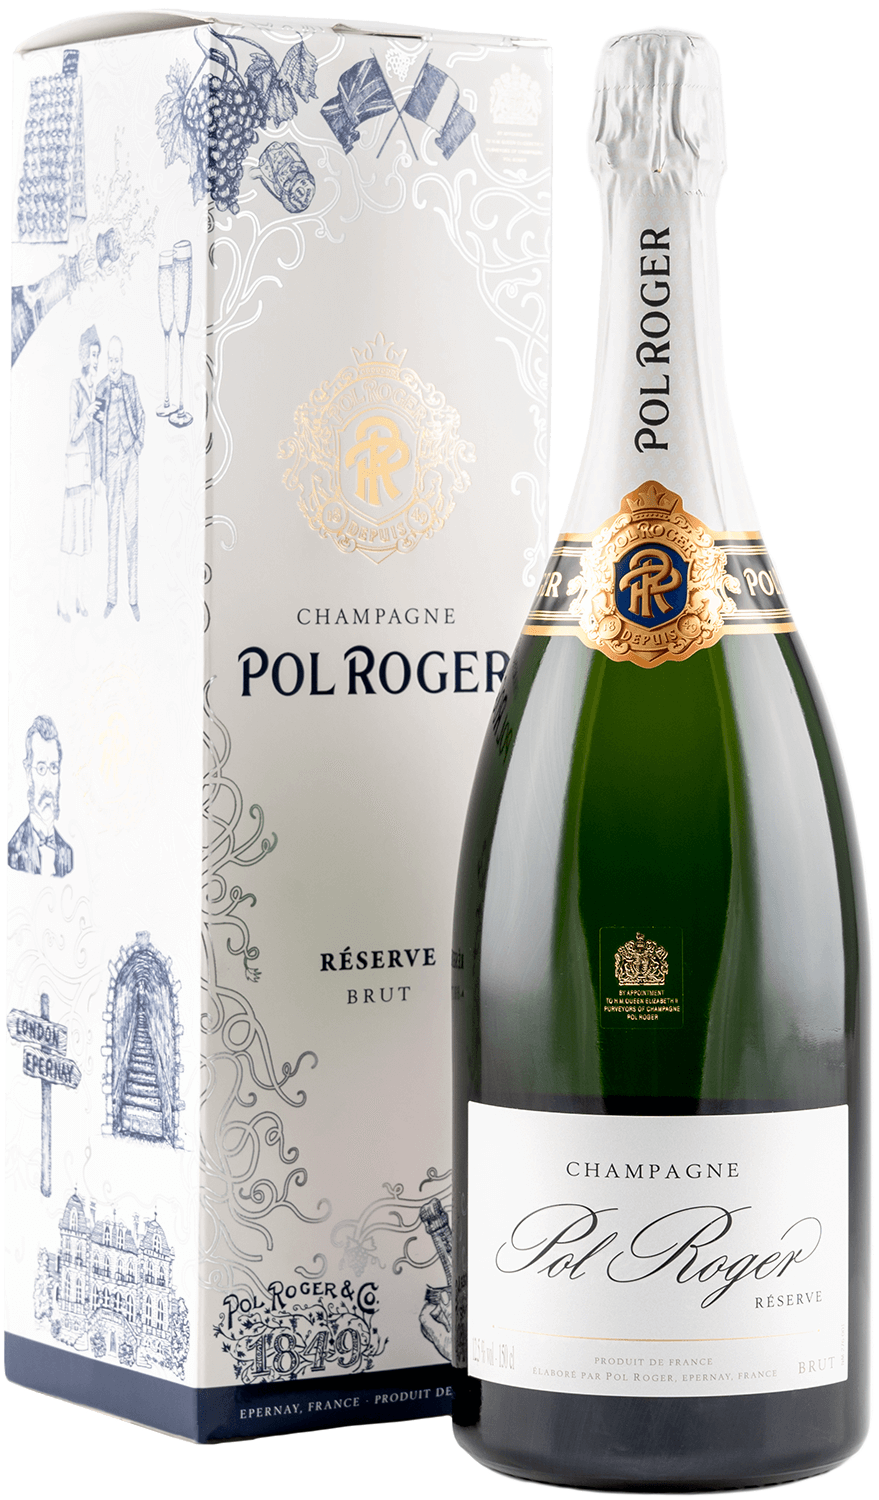 Pol Roger Reserve Champagne AOC (gift box) drappier clarevallis champagne aoc gift box